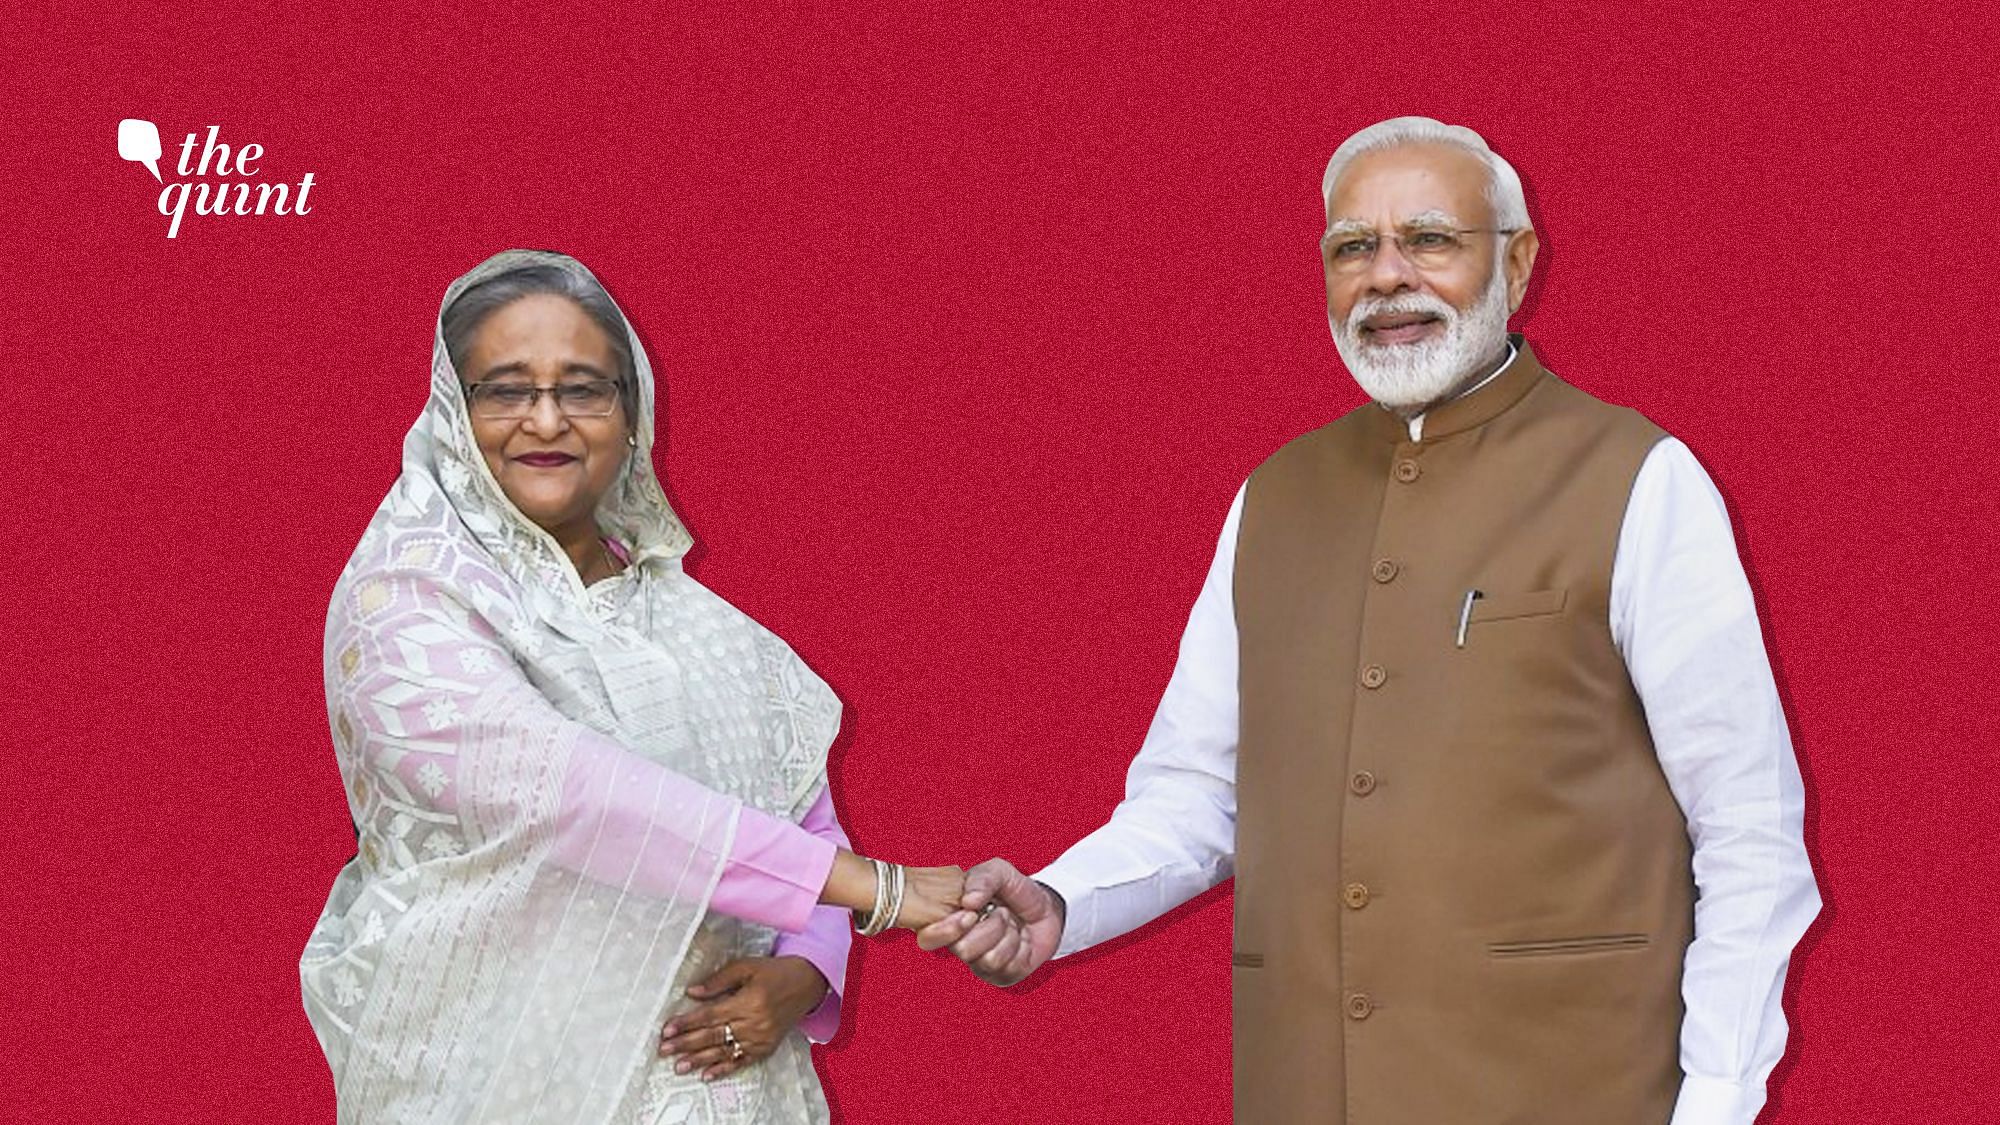 Image of Bangladesh PM Sheikh Hasina and PM Modi used for representational purposes.